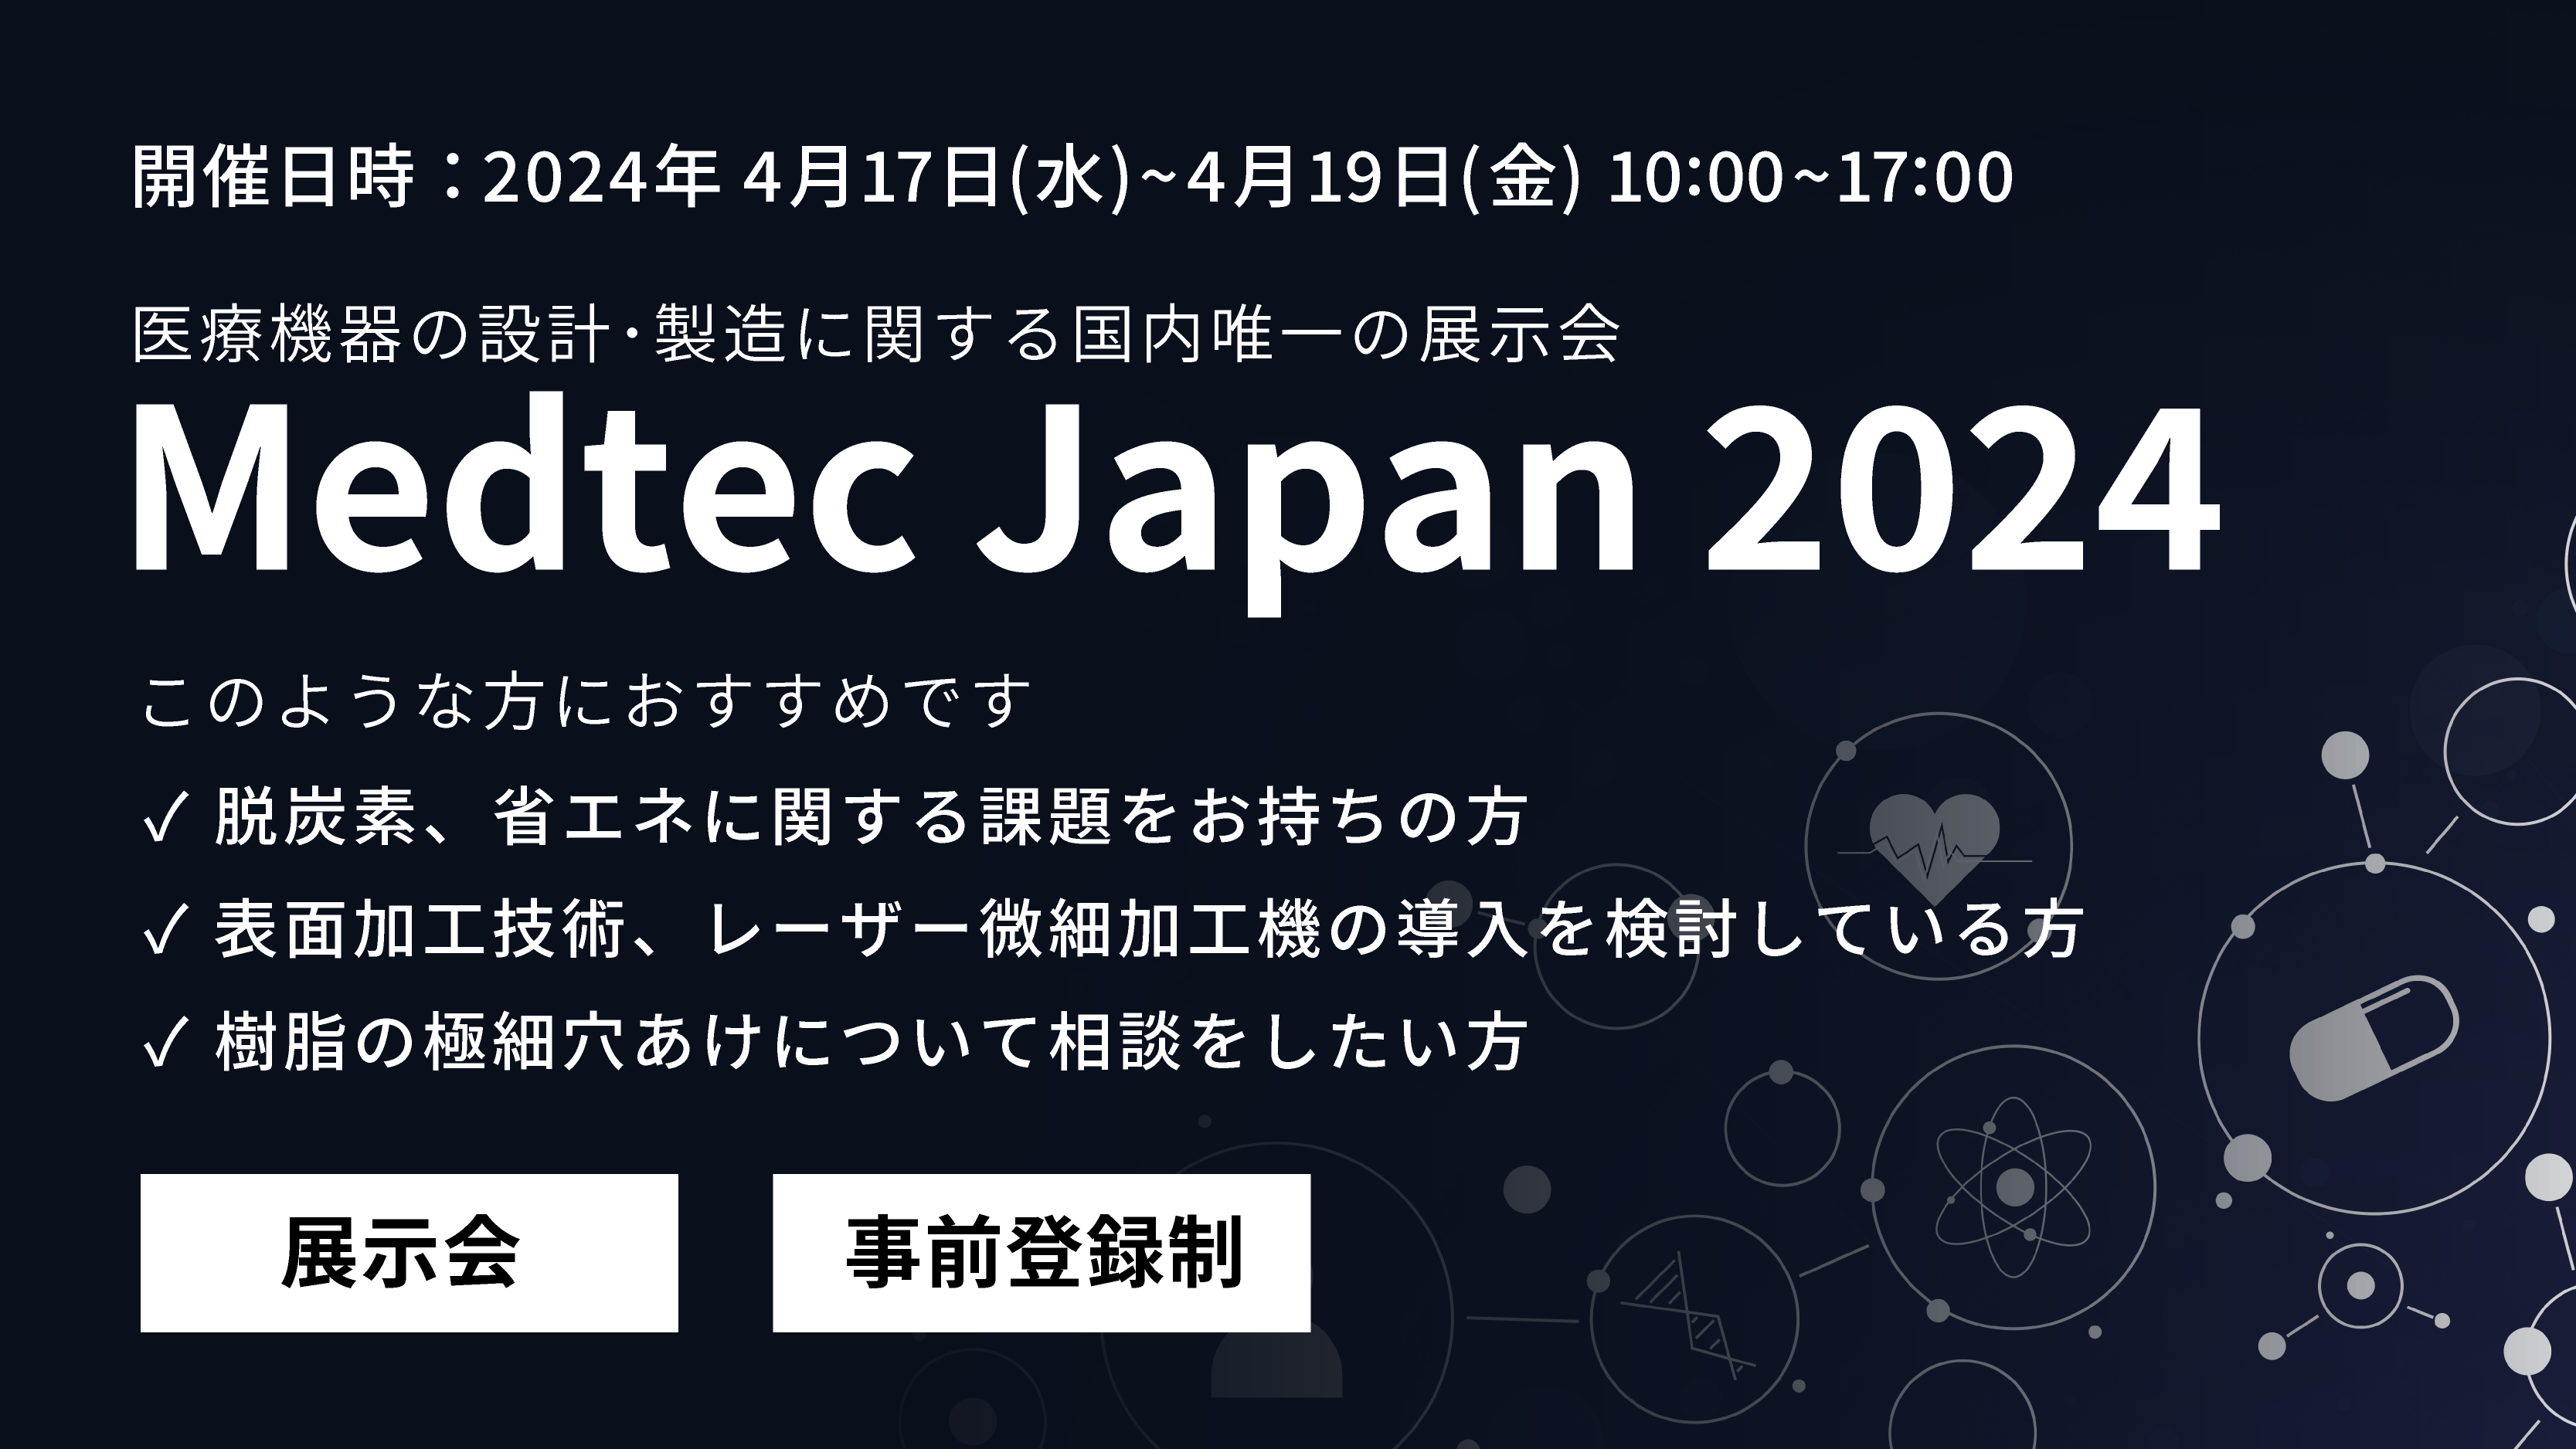 Medtec Japan 2024 出展